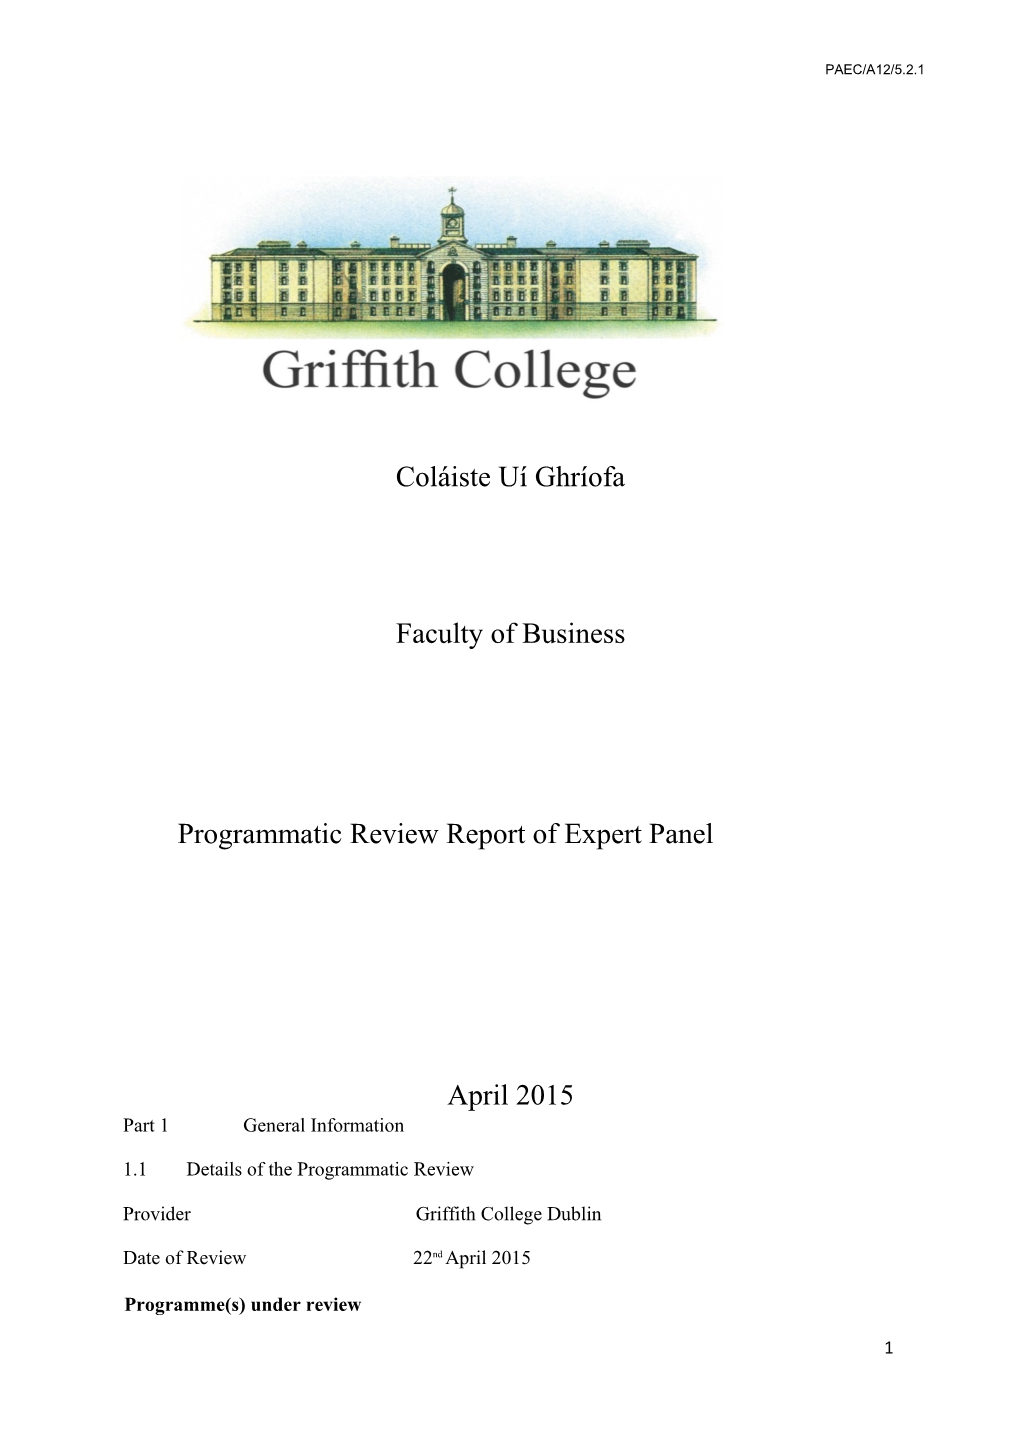 Programmatic Review Report of Expert Panel